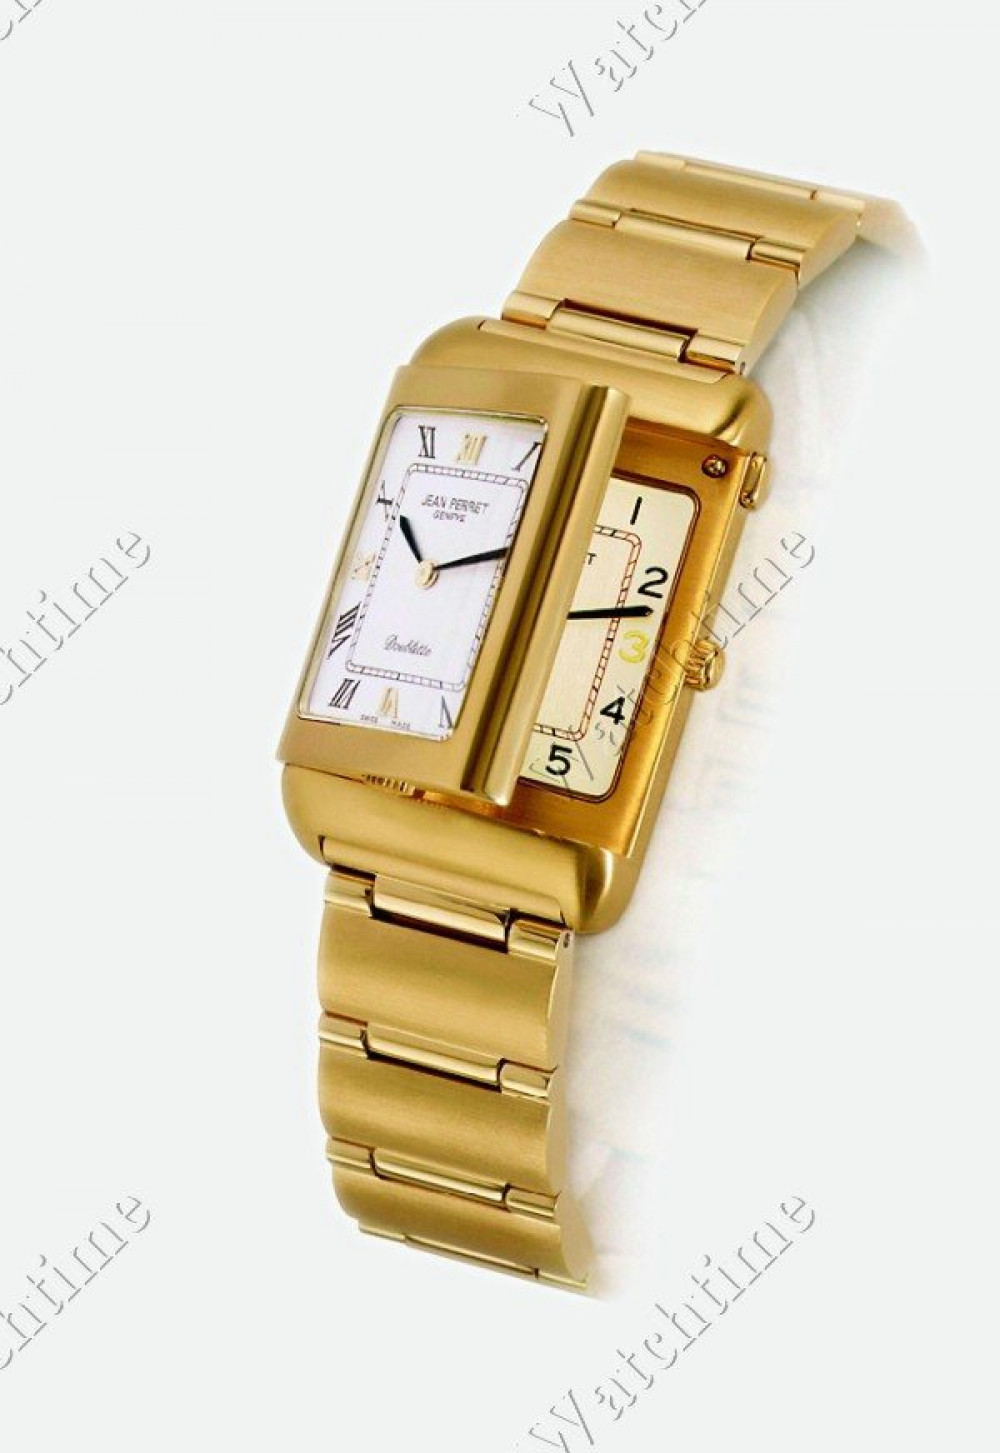 Zegarek firmy Jean Perret Genève, model Doublette Time To Call Home